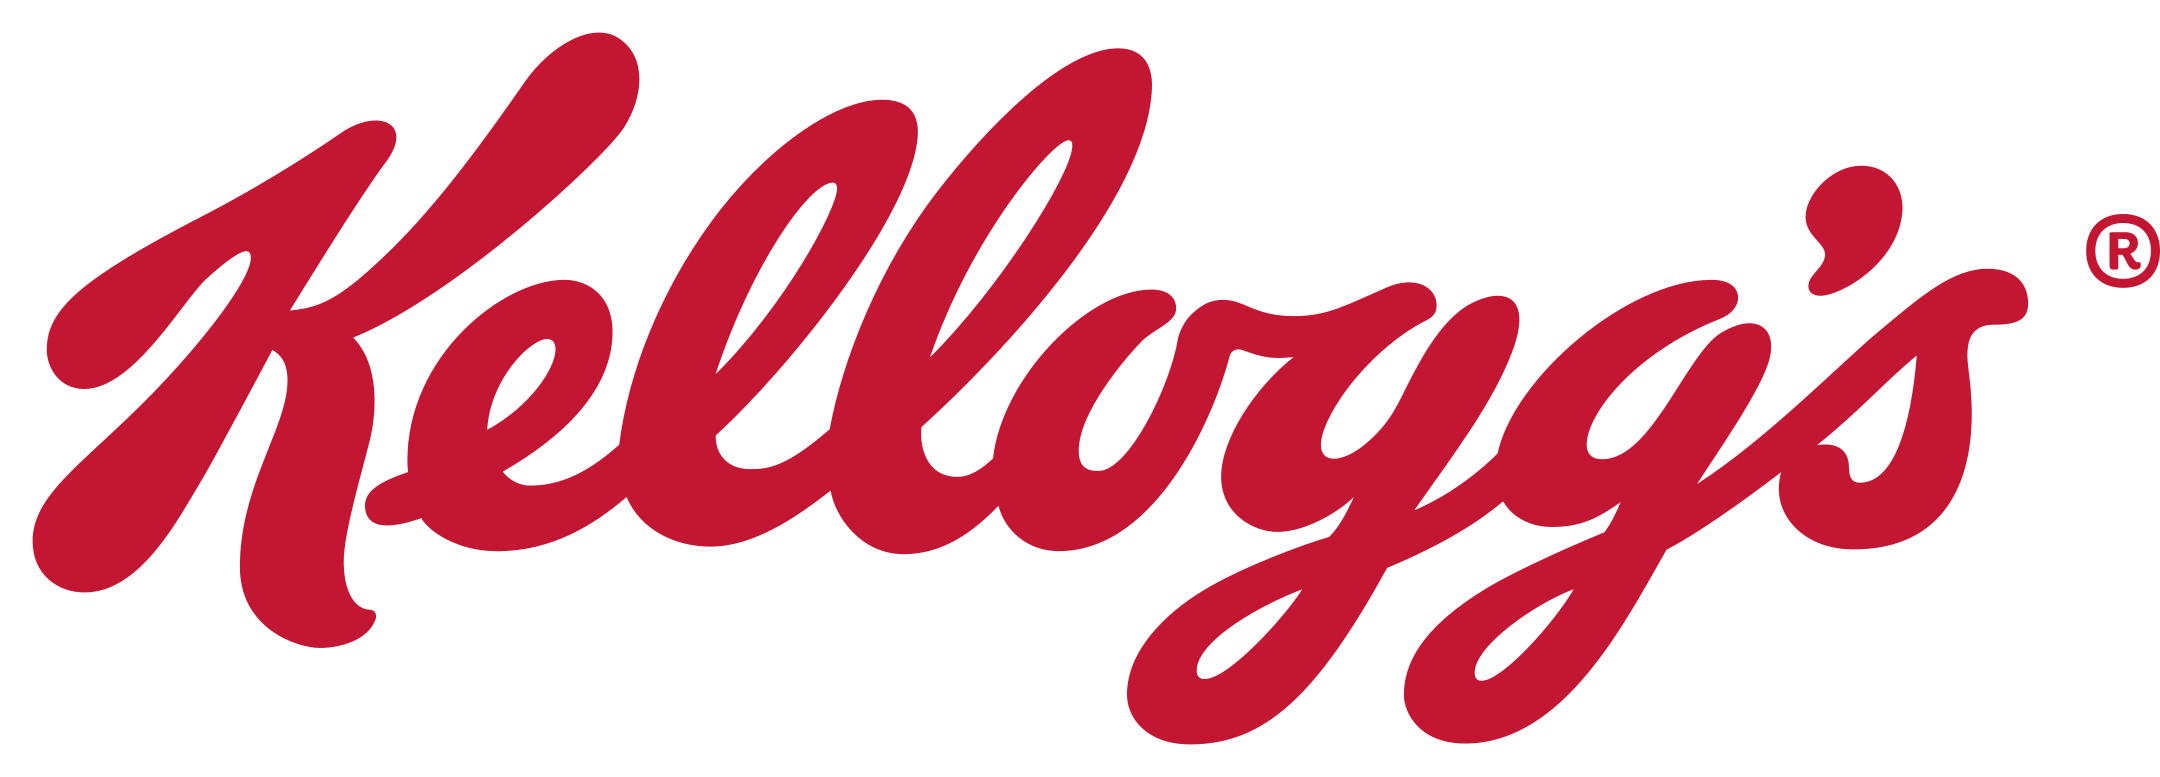 kelloggs logo 1 1 - Kellogg’s Logo